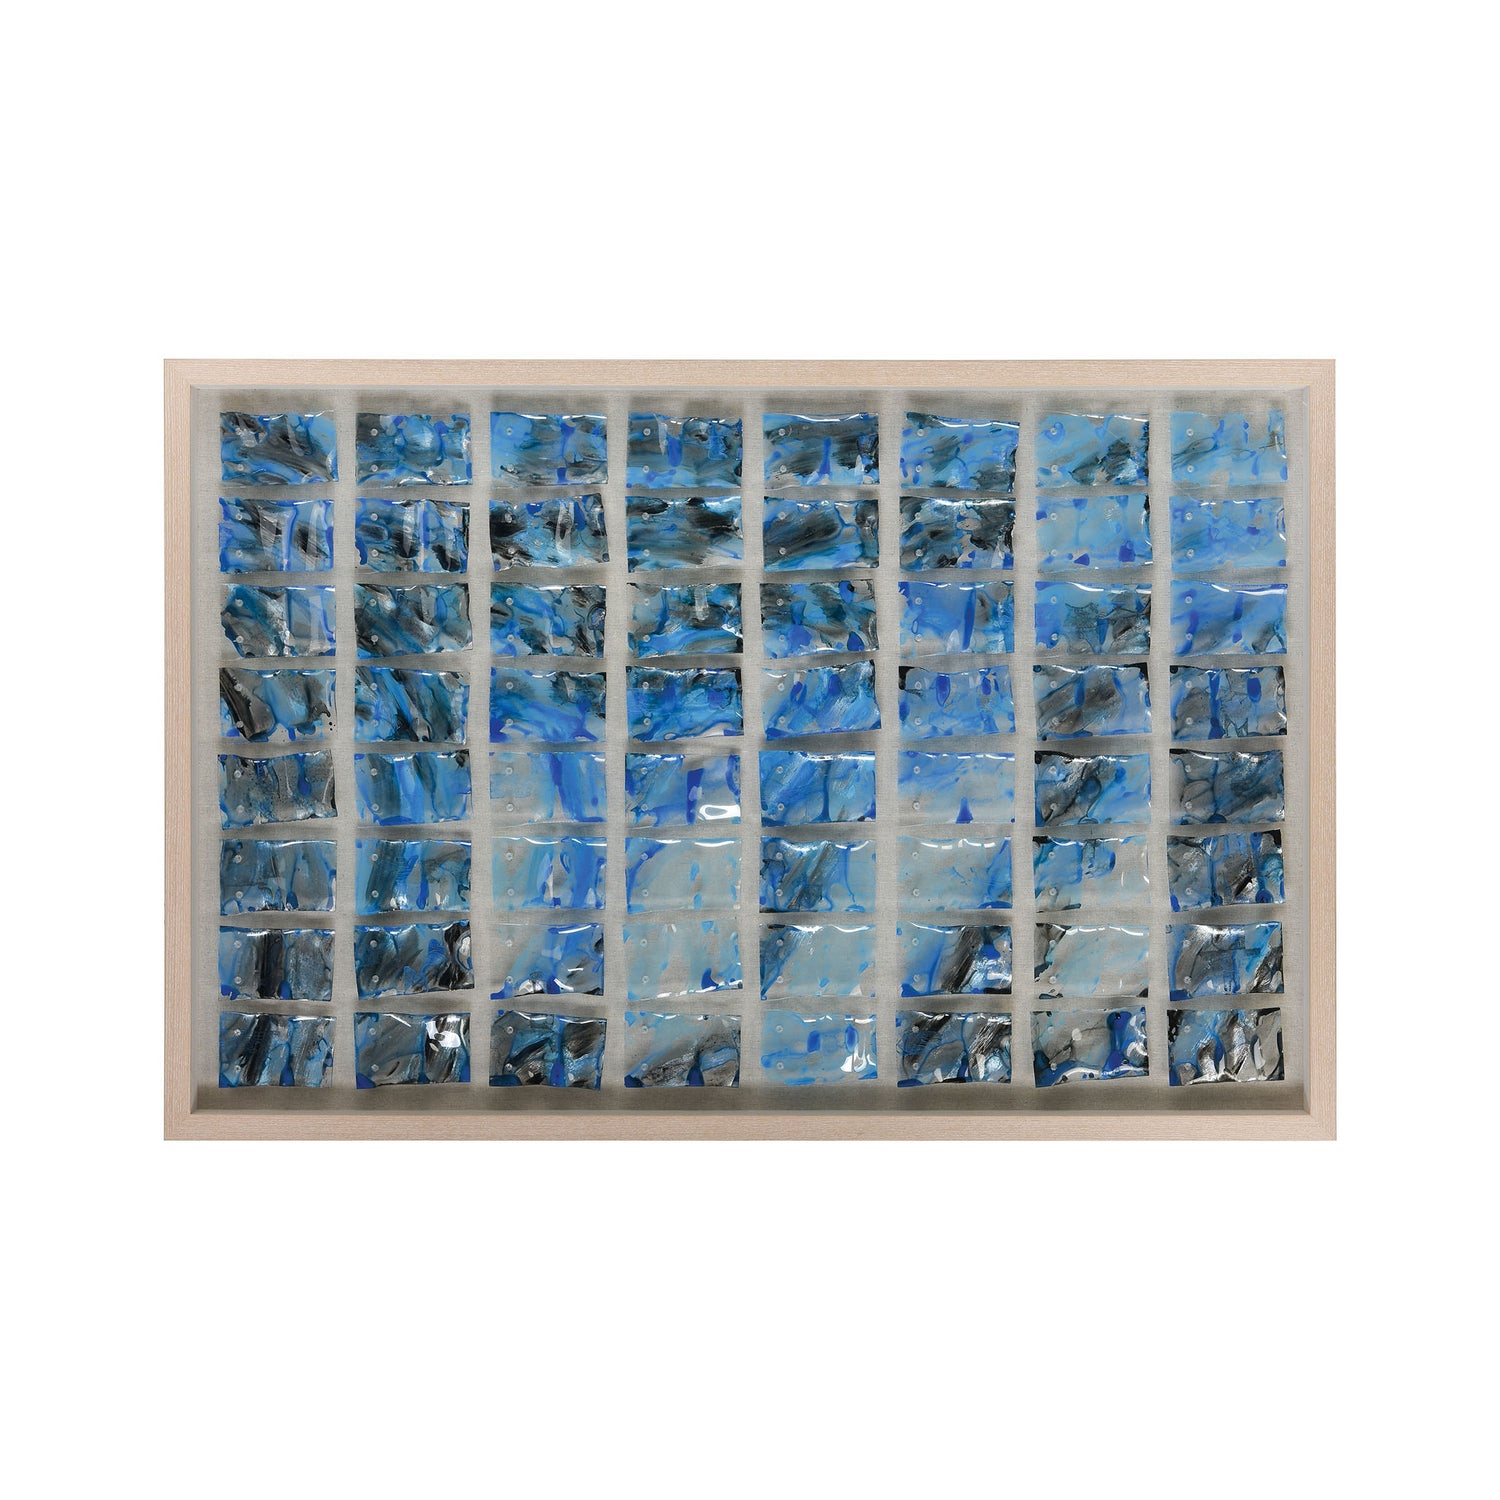 ELK Home - 3168-081 - Wall Art - Glass Ocean - Bleached Wood, Mixed Media, Mixed Media